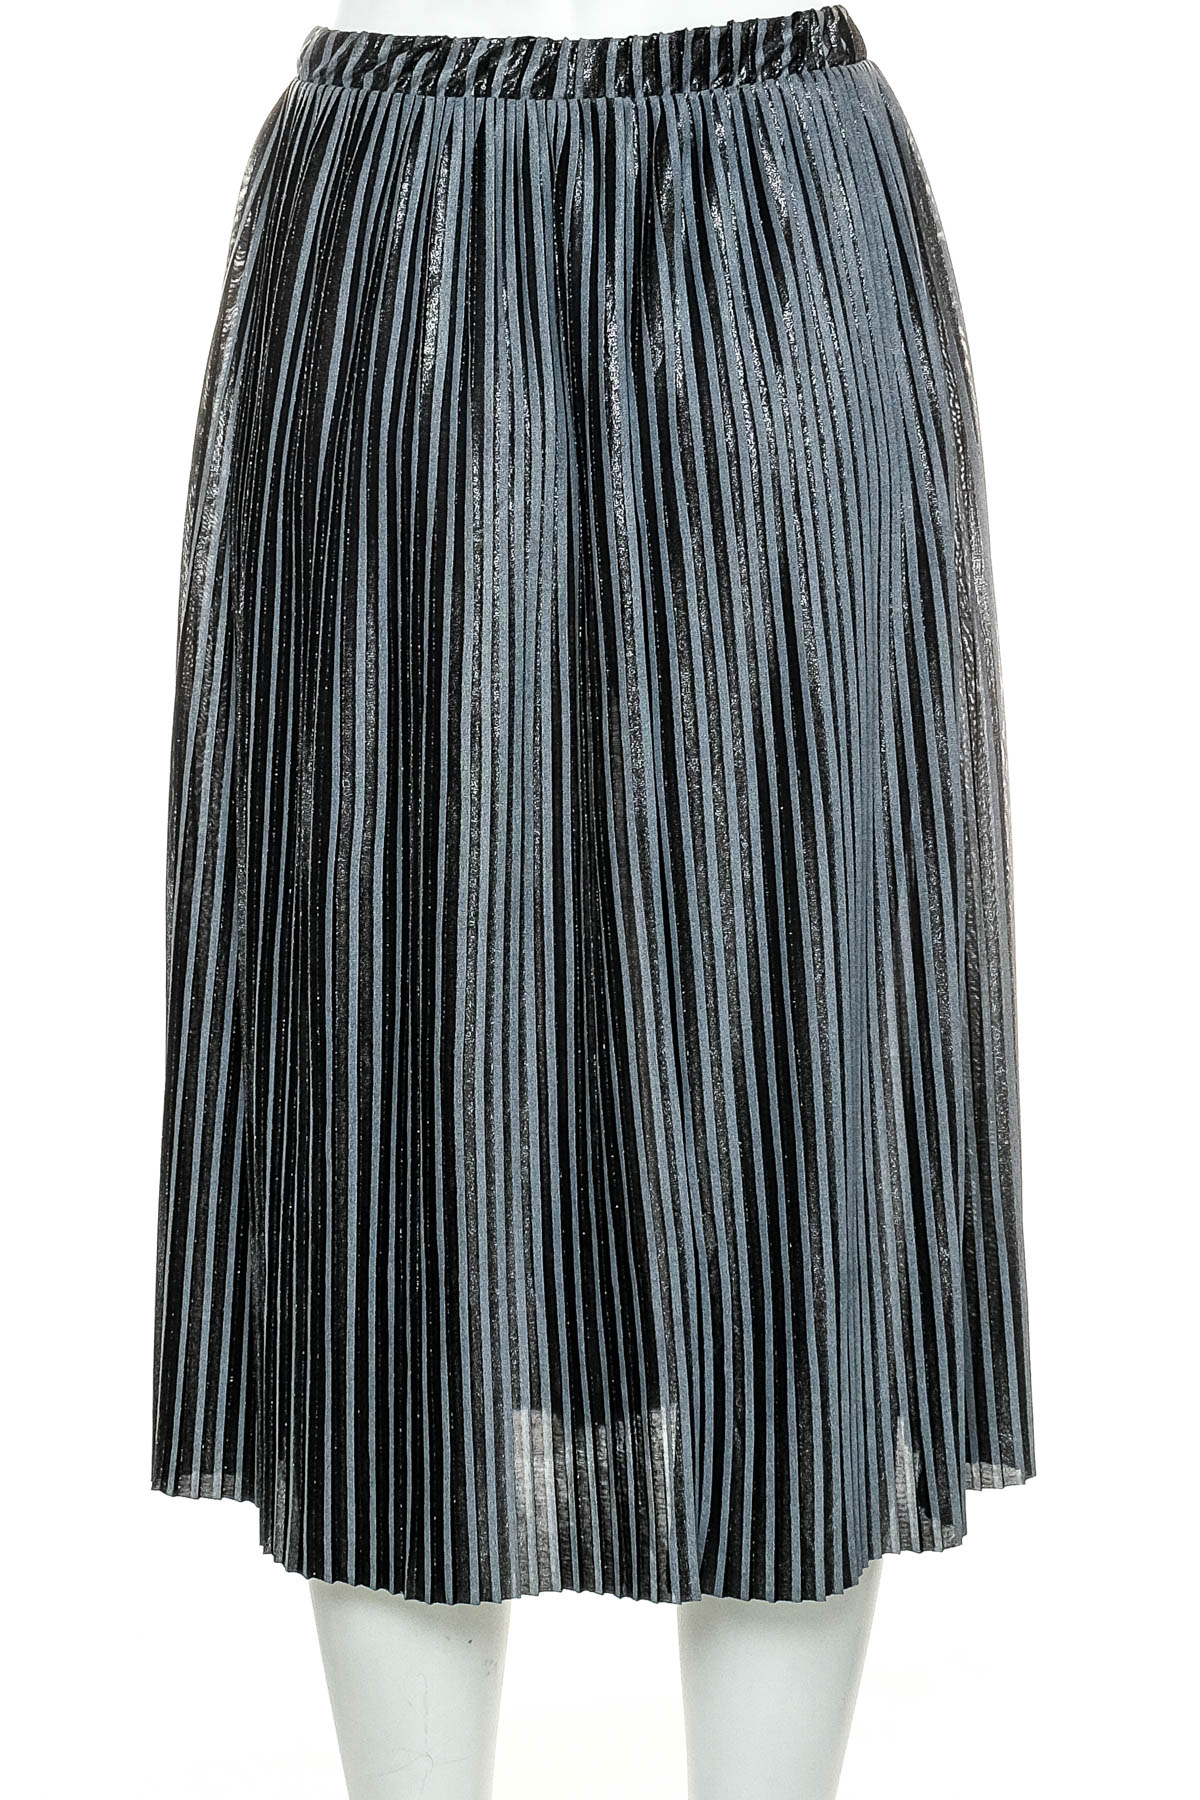 Skirt - ZARA W&B Collection - 1